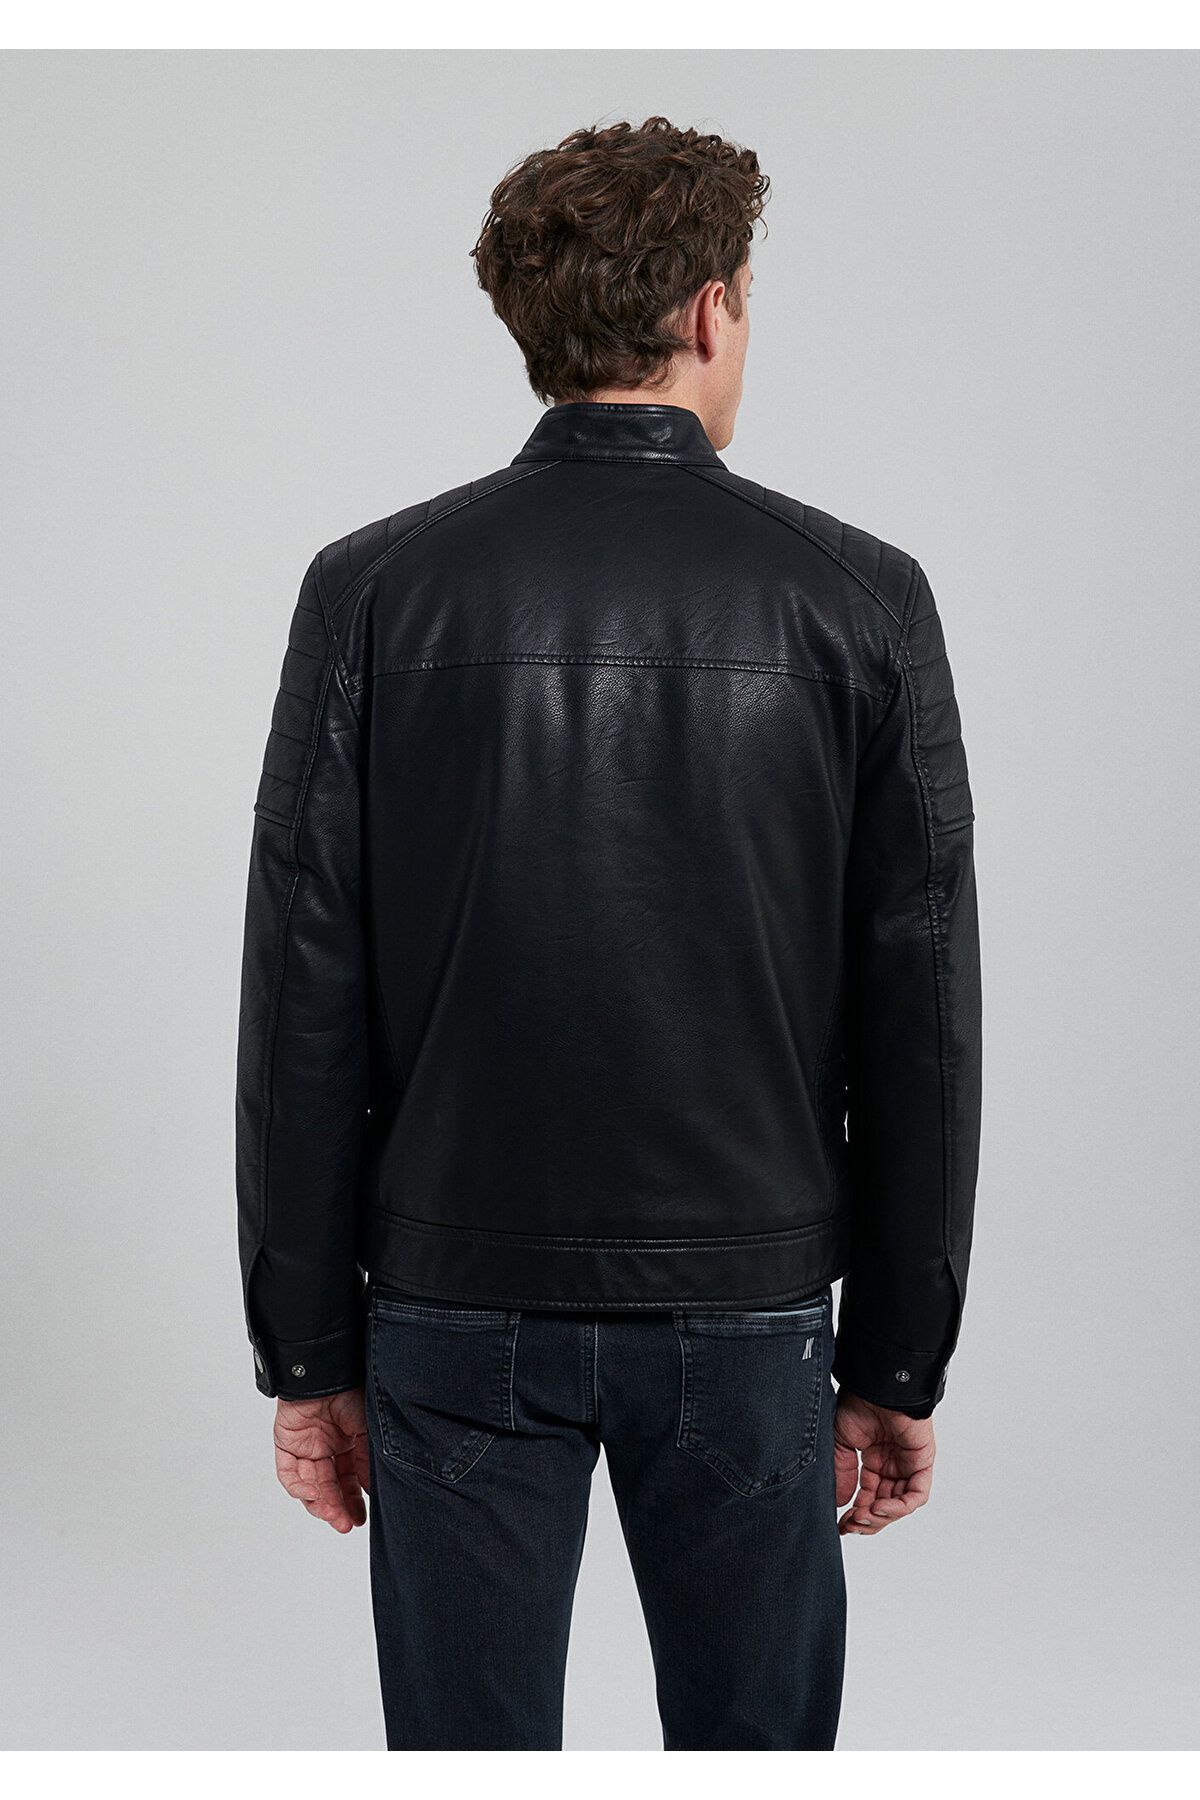 Mavi ژاکت چرمی مصنوعی سیاه و سفید باریک / برش 0110345-900